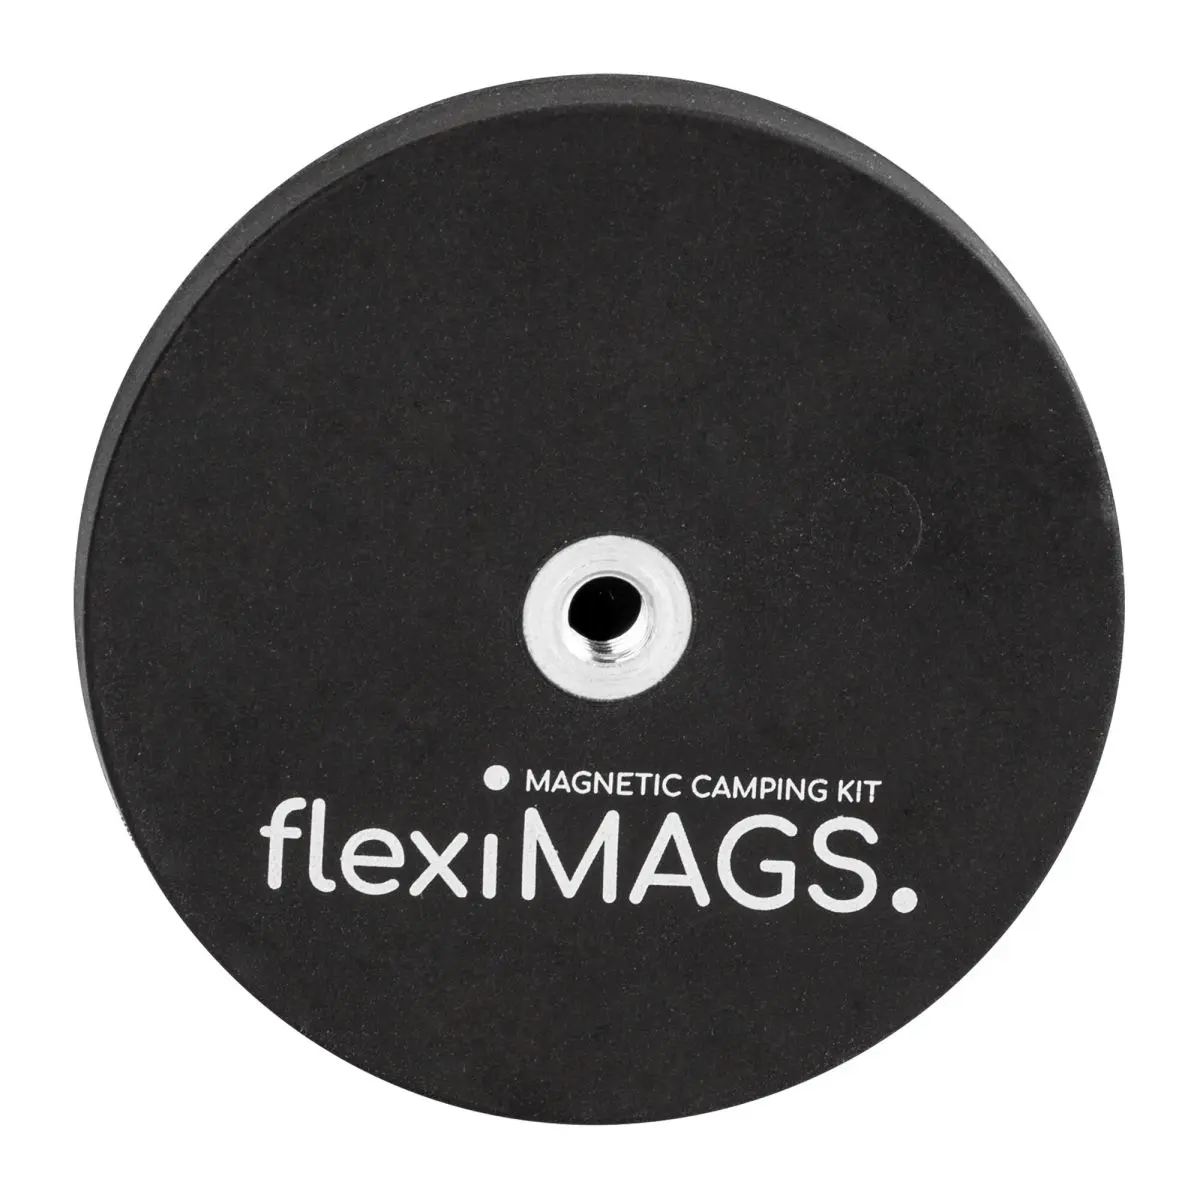 Magnet rund flexiMAGS - flexiMAG-57, 2er Set schwarz